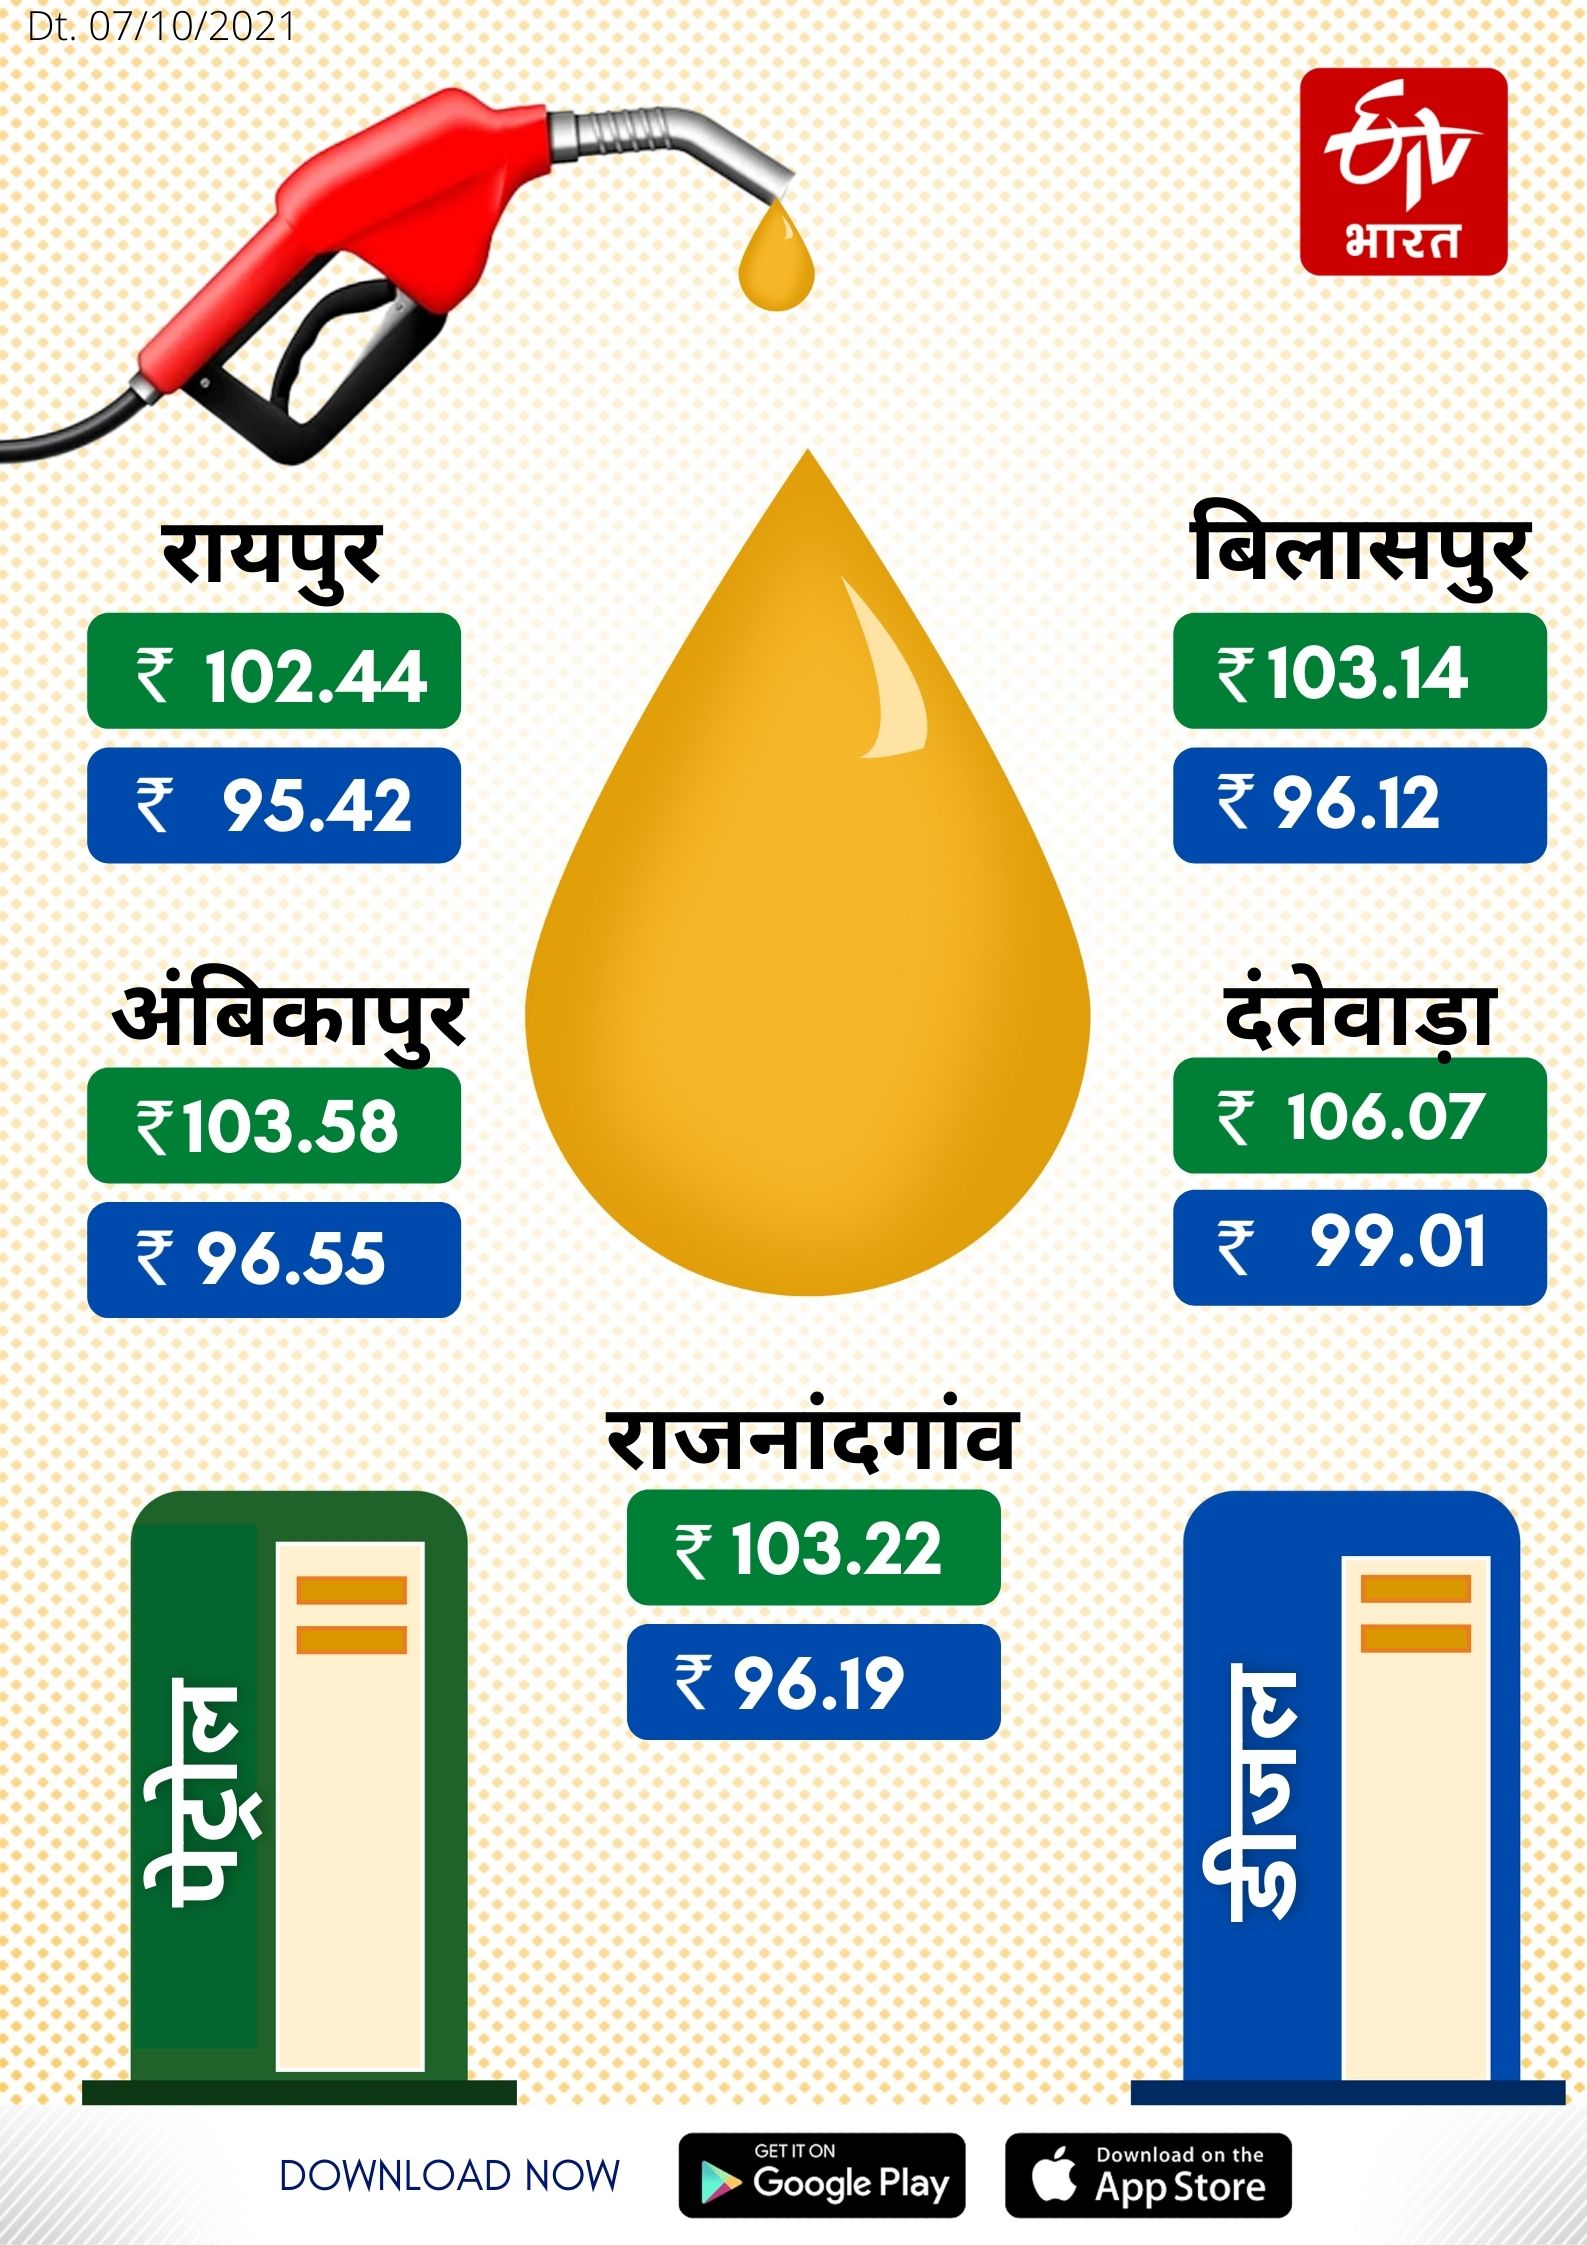 Chhattisgarh Petrol Diesel Price Today